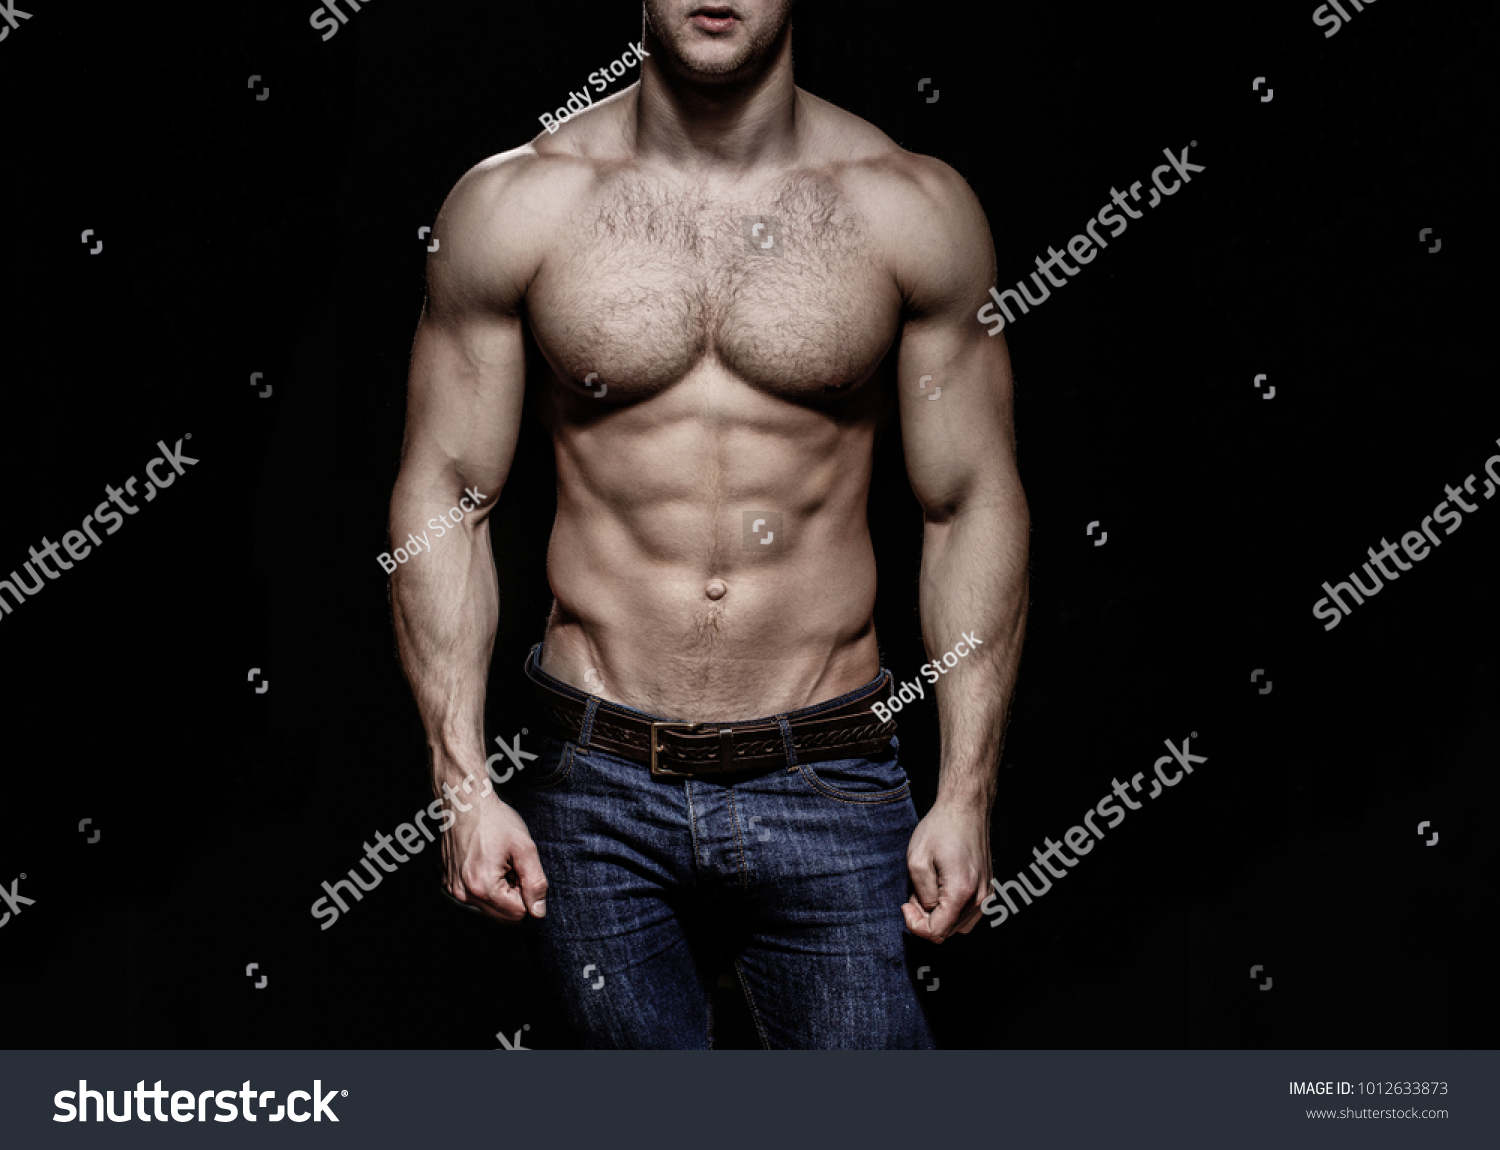 Muscle men nude